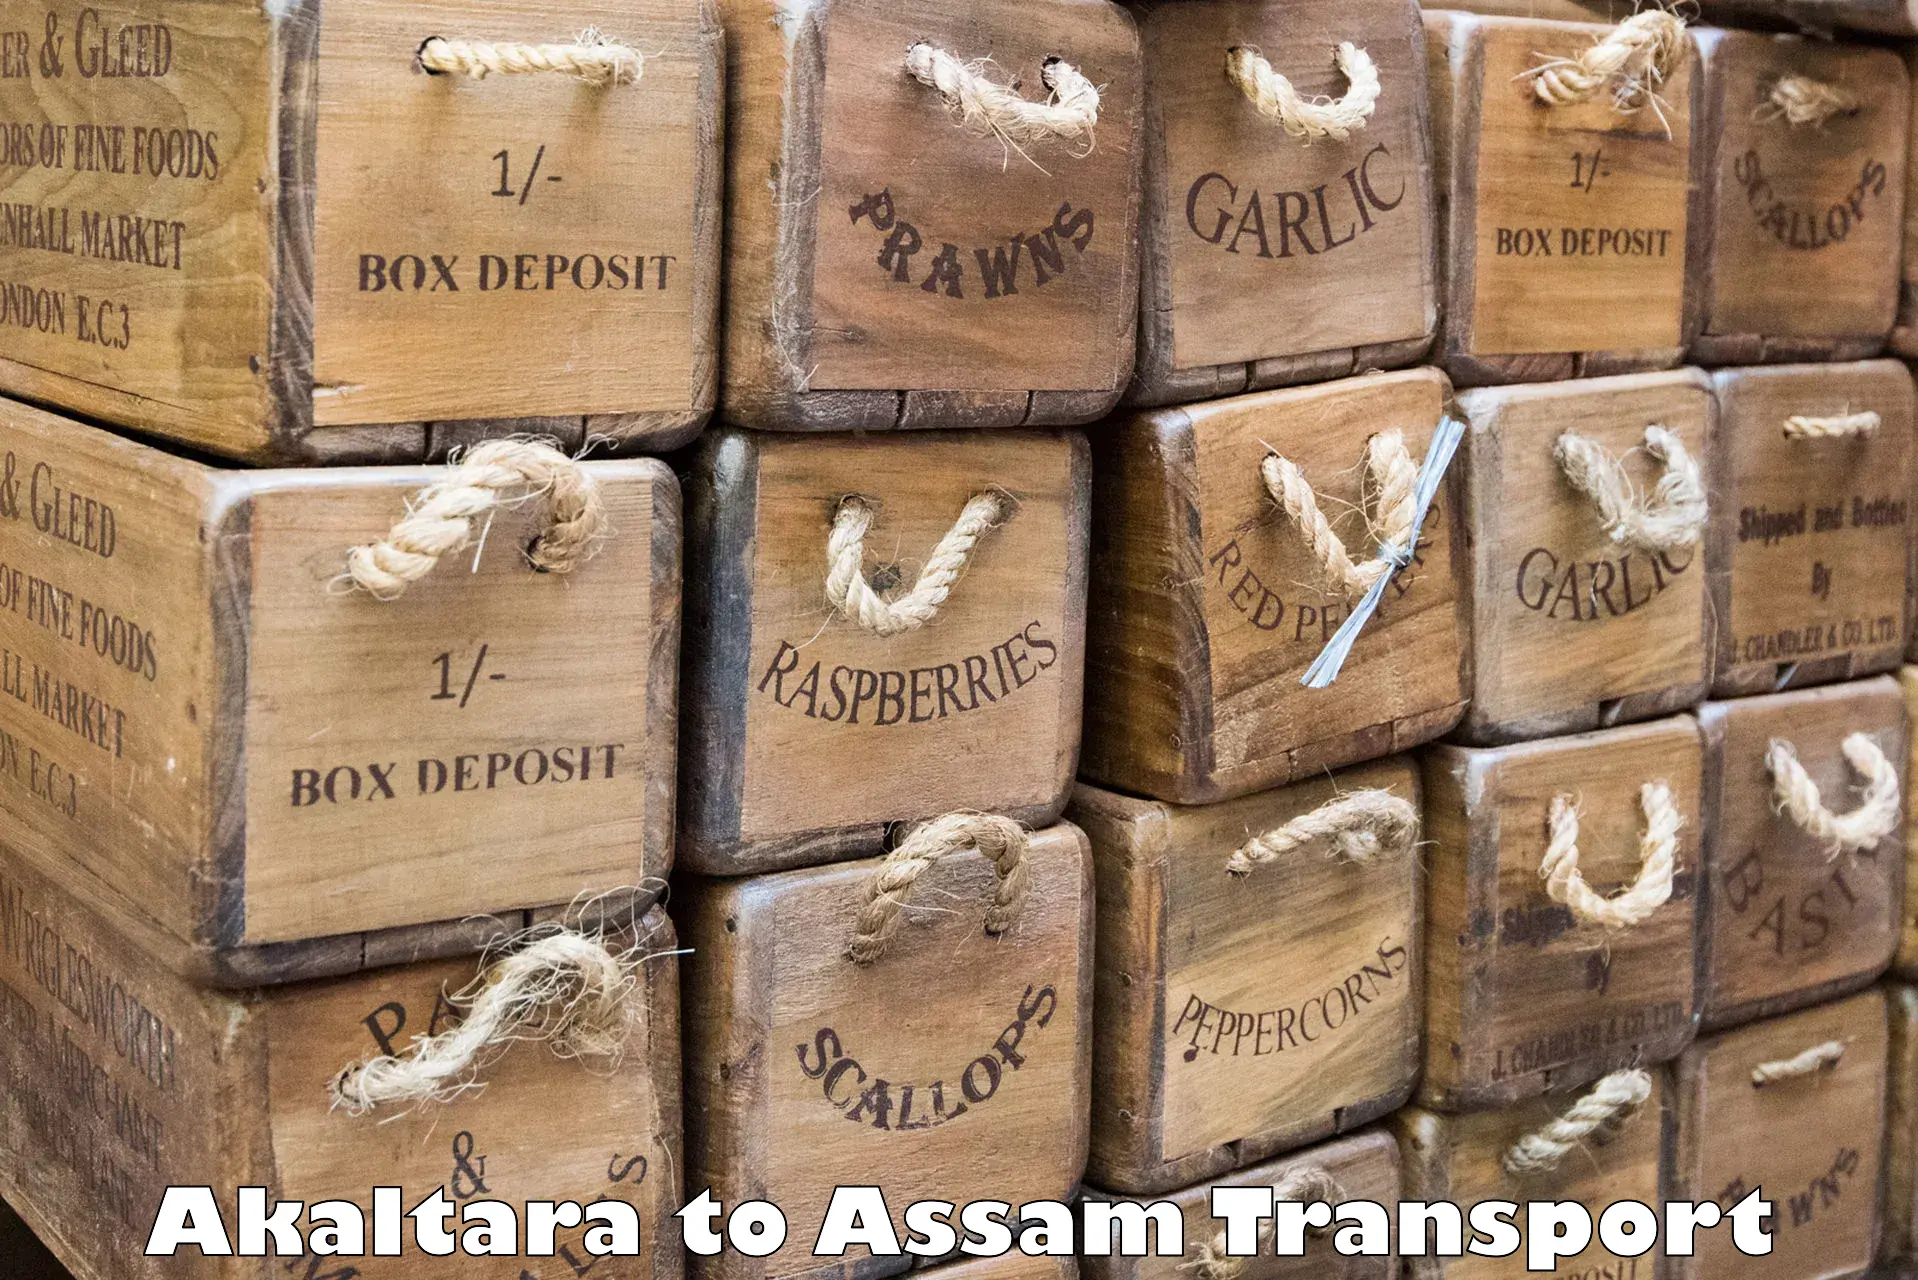 Express transport services in Akaltara to Guwahati